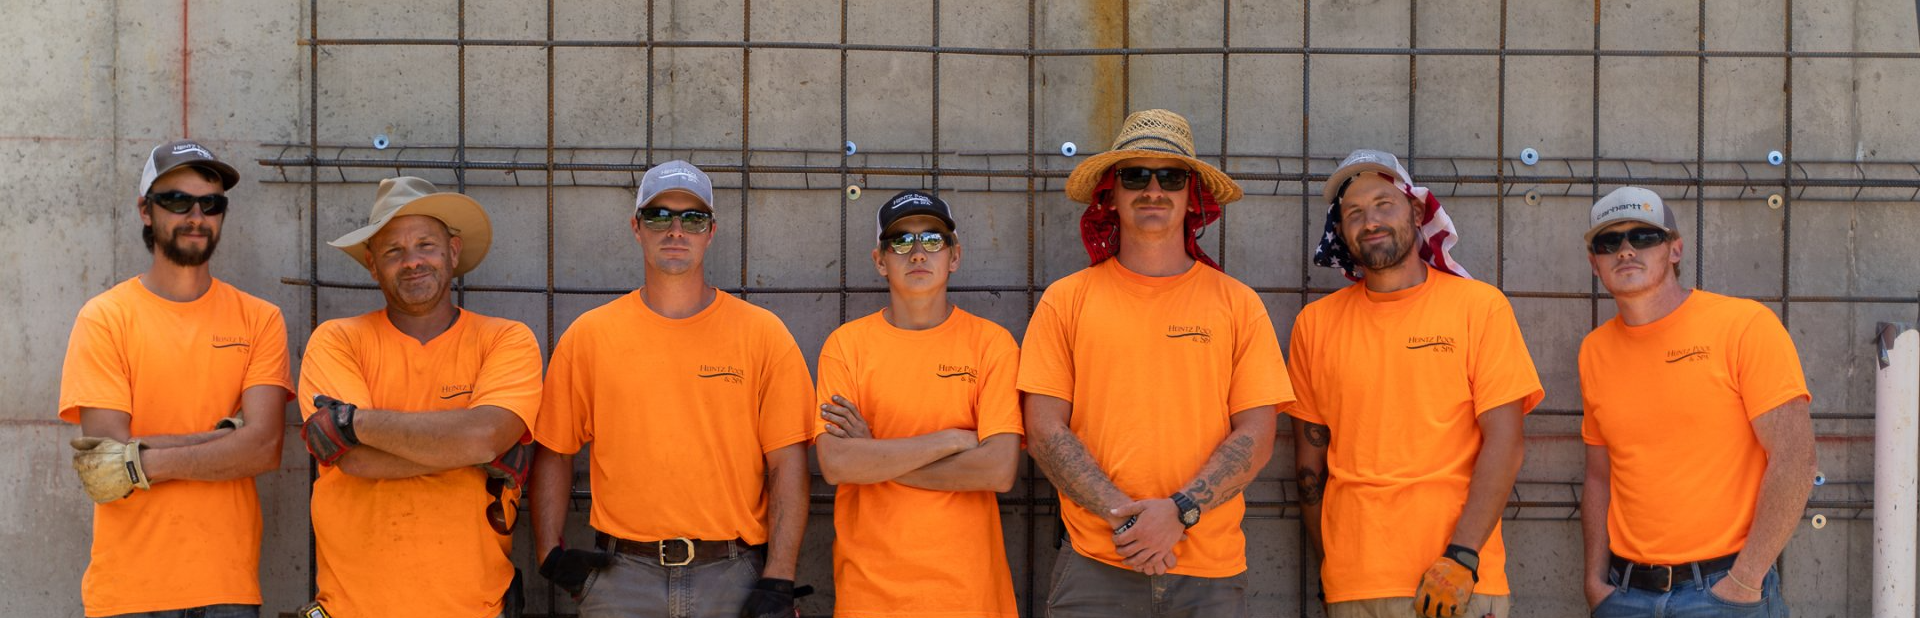 Heintz Pool & Spa team wearing orange uniform and standing side by side